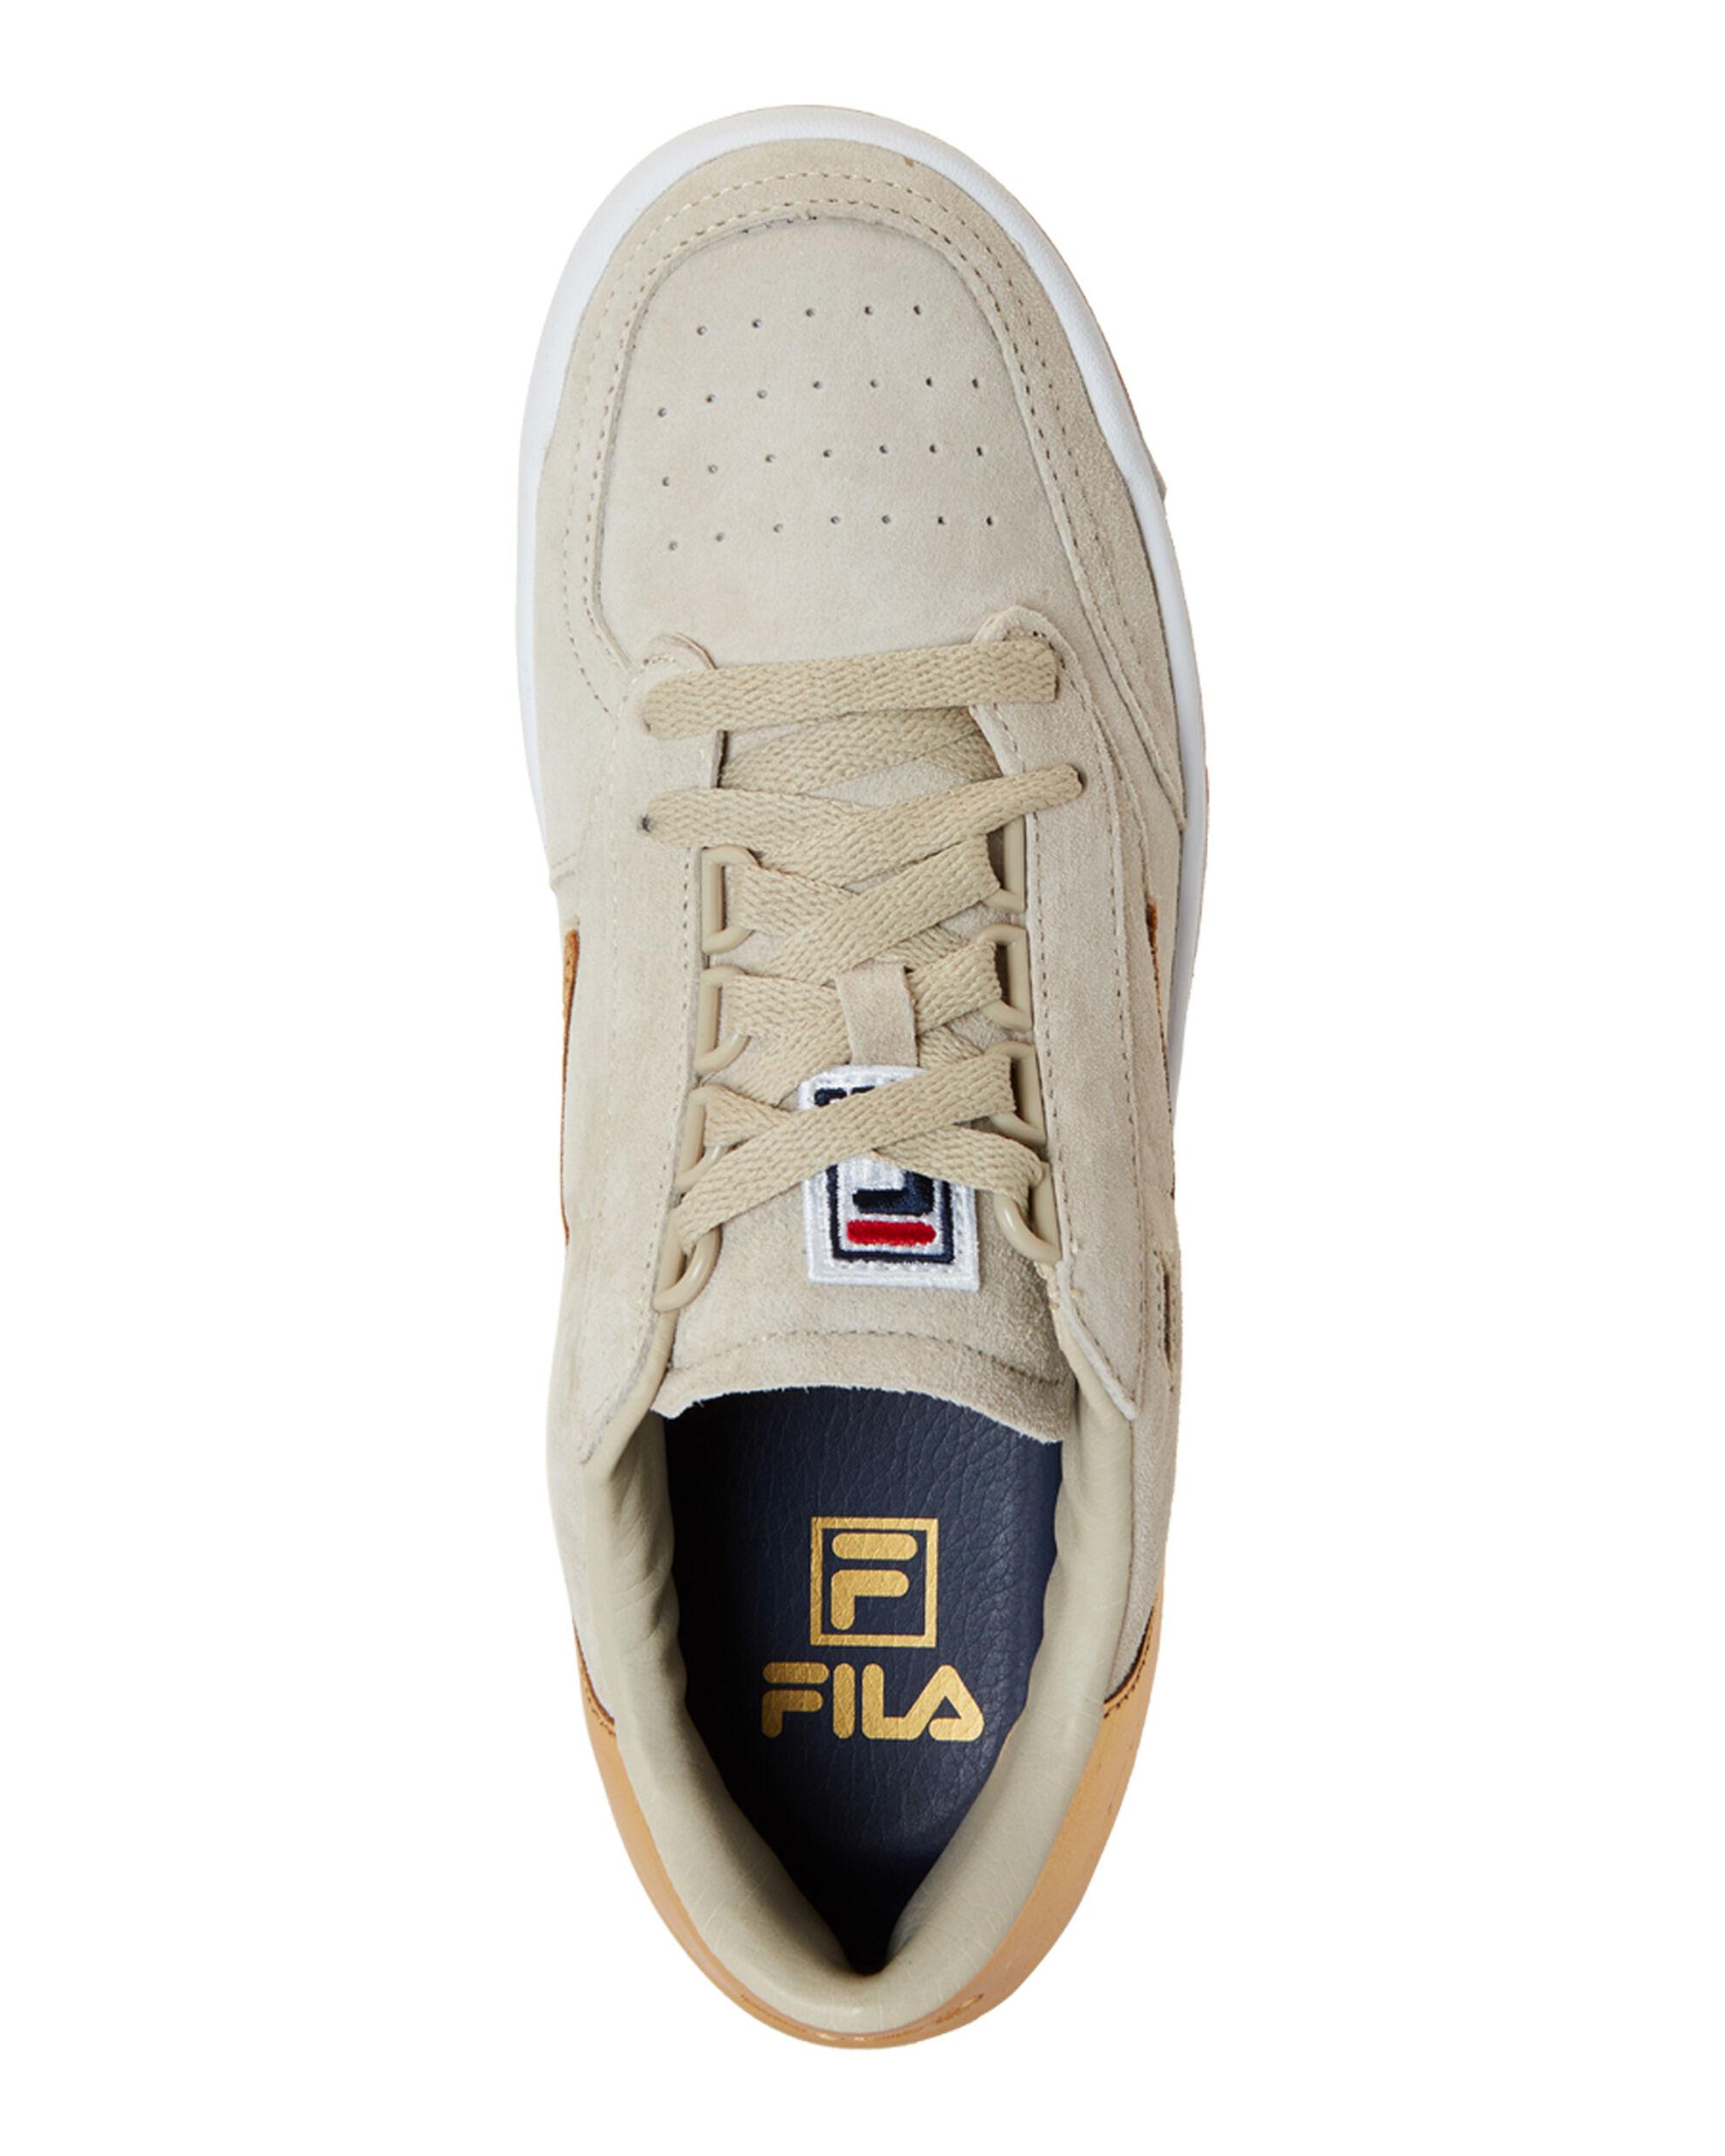 Fila Suede Cream & Gold Original Tennis Low-top Sneakers in Cream Gold ...